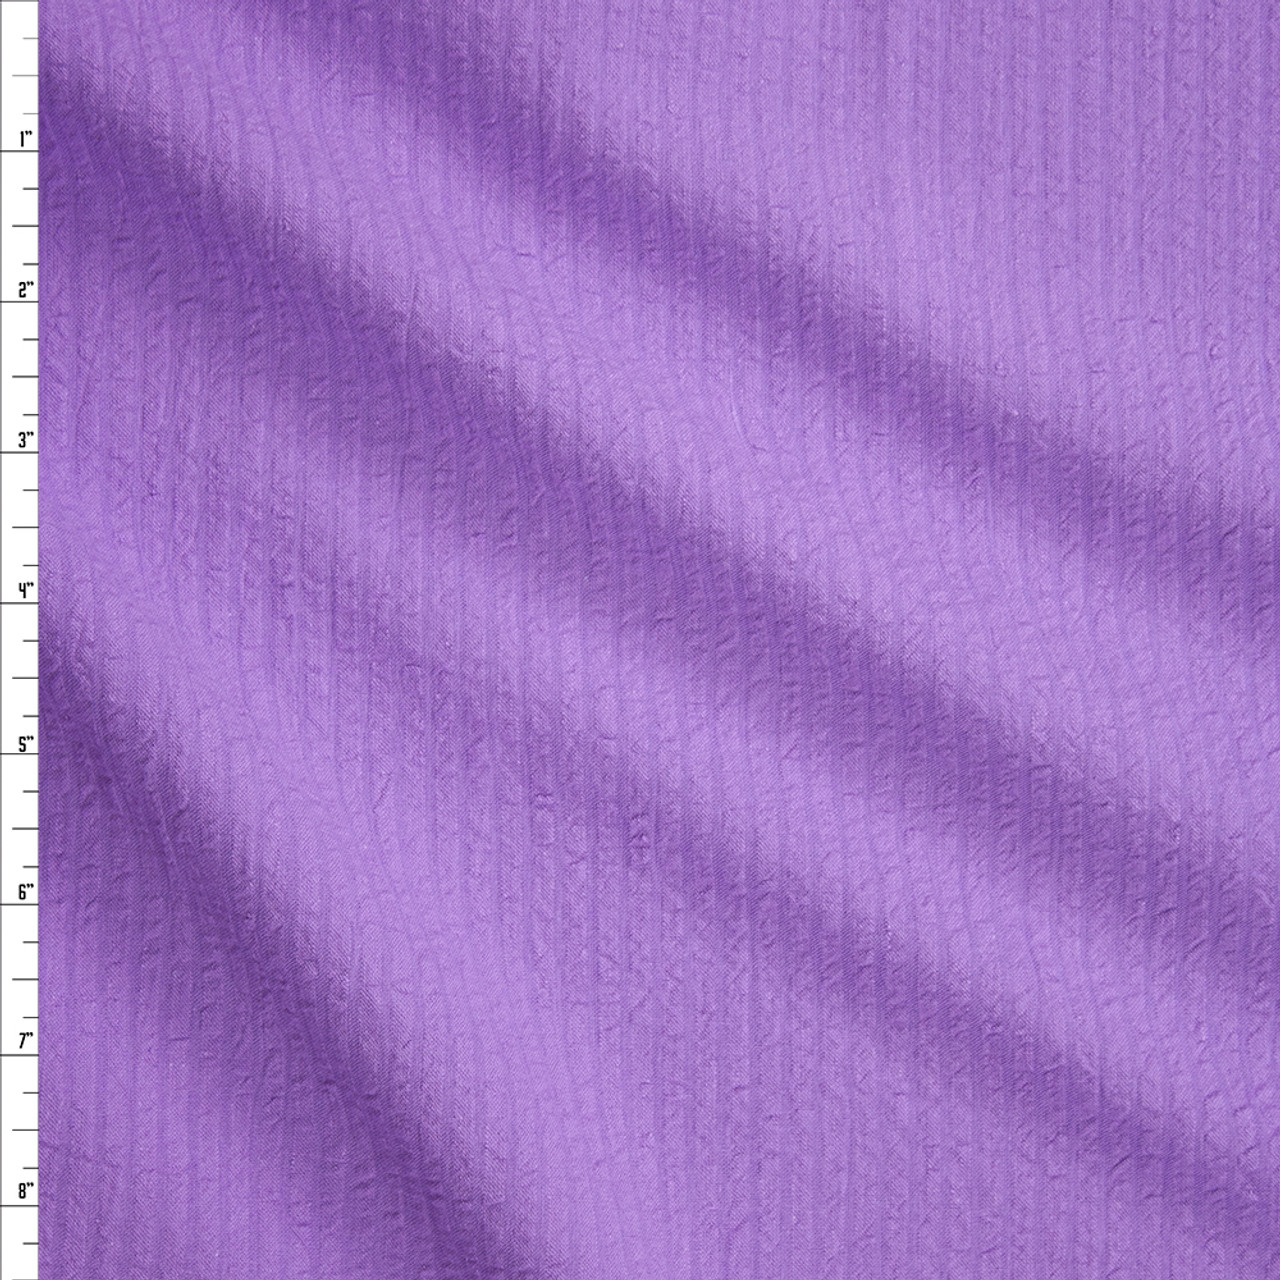 Cali Fabrics Bright Lilac Cotton Seersucker Fabric by the Yard